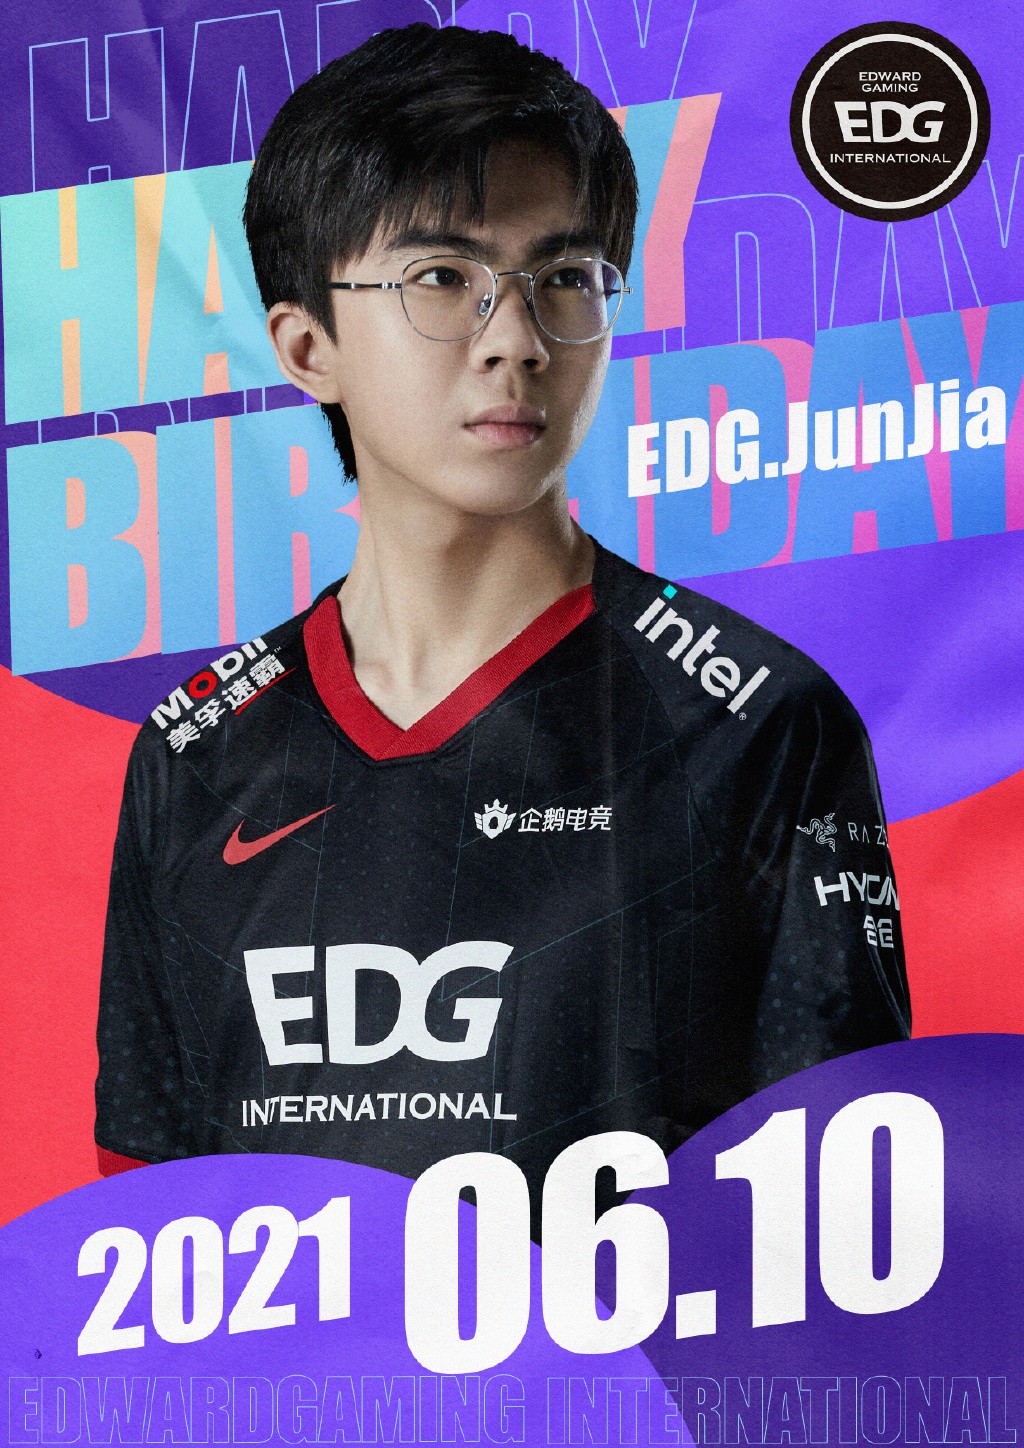 EDG祝Junjia生日快乐：希望他可以继续努力 得到更多人的认可